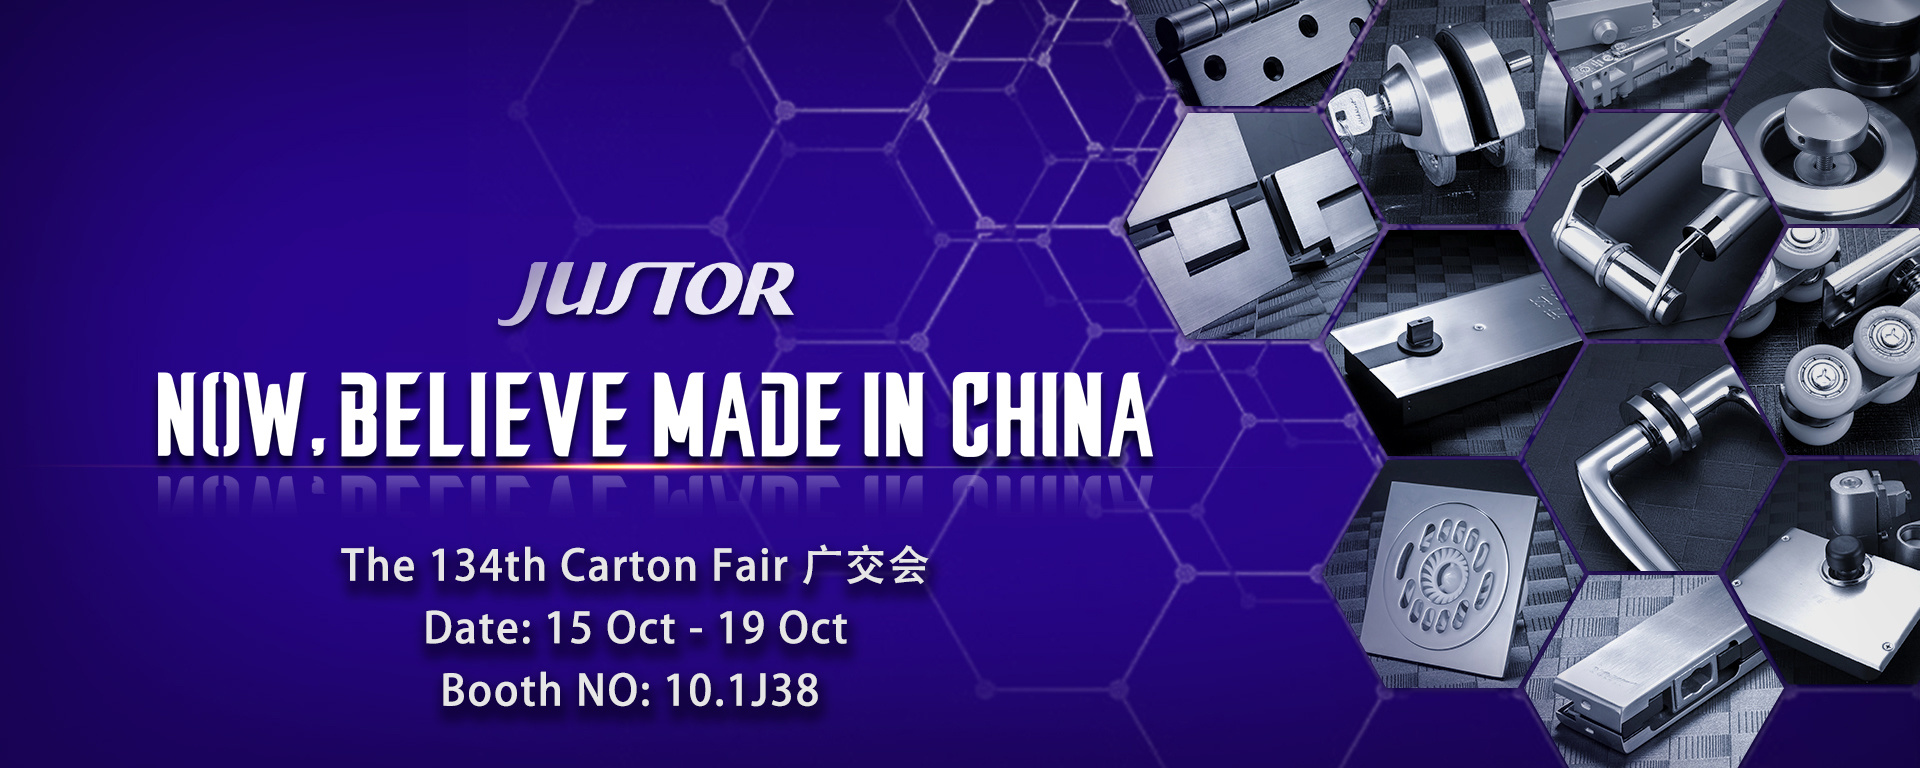 JUSTORjs6668金沙登录入口欢迎您 The 134th Canton Fair 广交会（广州）